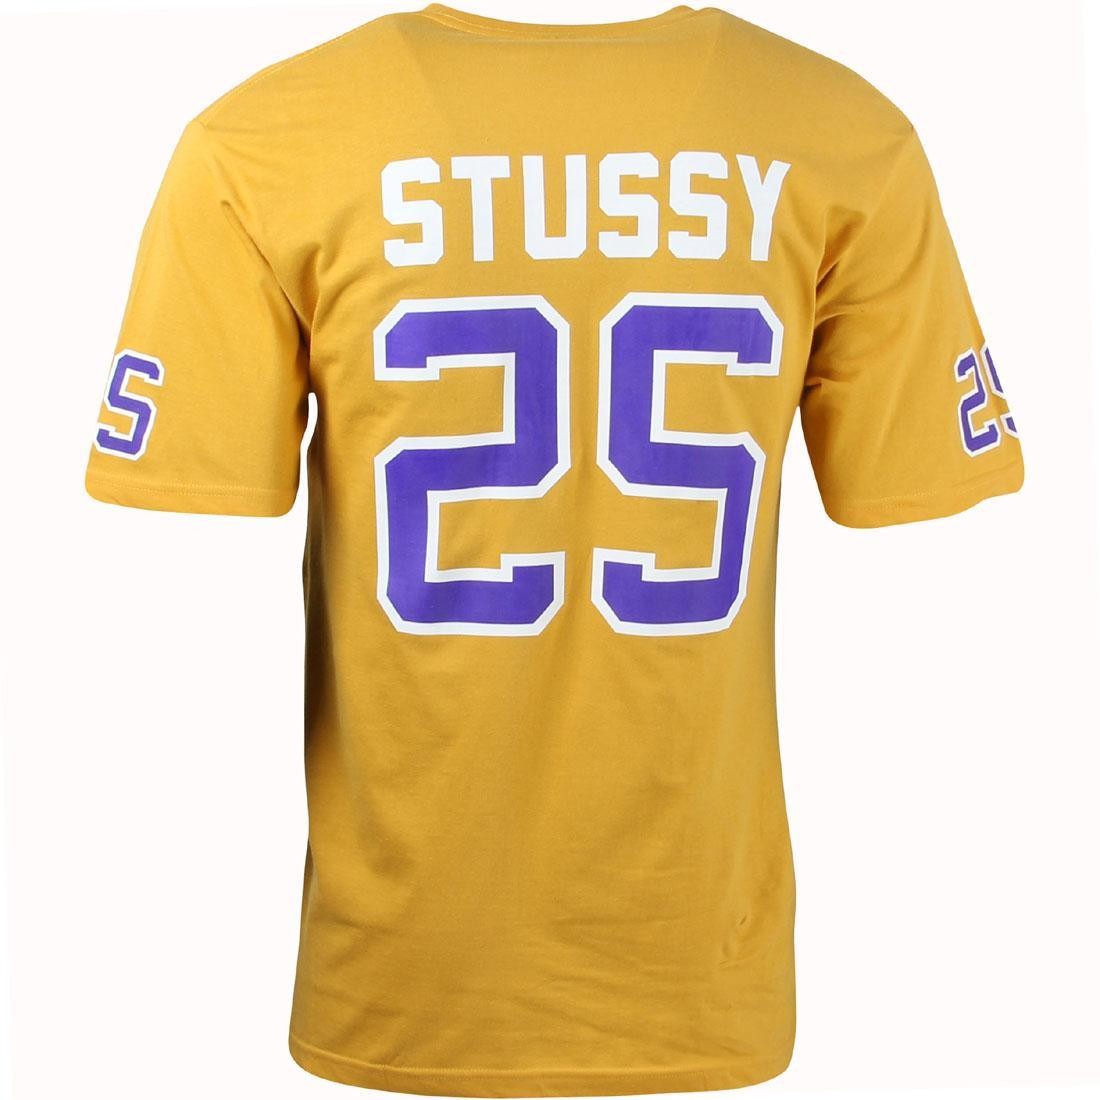 Stussy Men SS Jersey Tee (yellow / mustard)